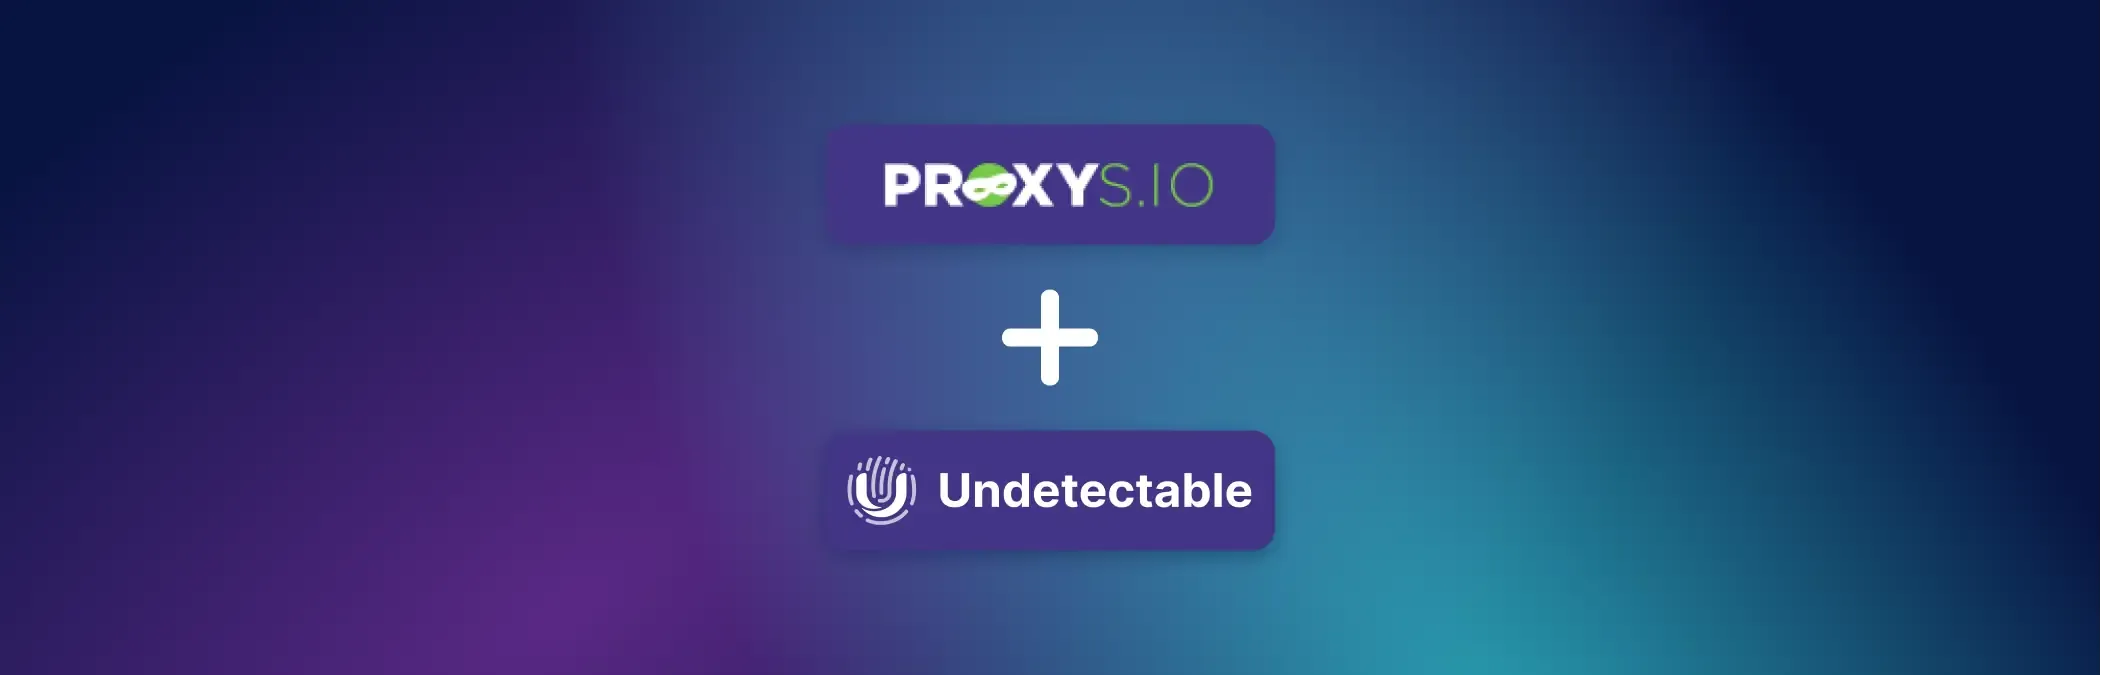 UndetectableブラウザーでProxys.ioサービスを使用する方法ガイド